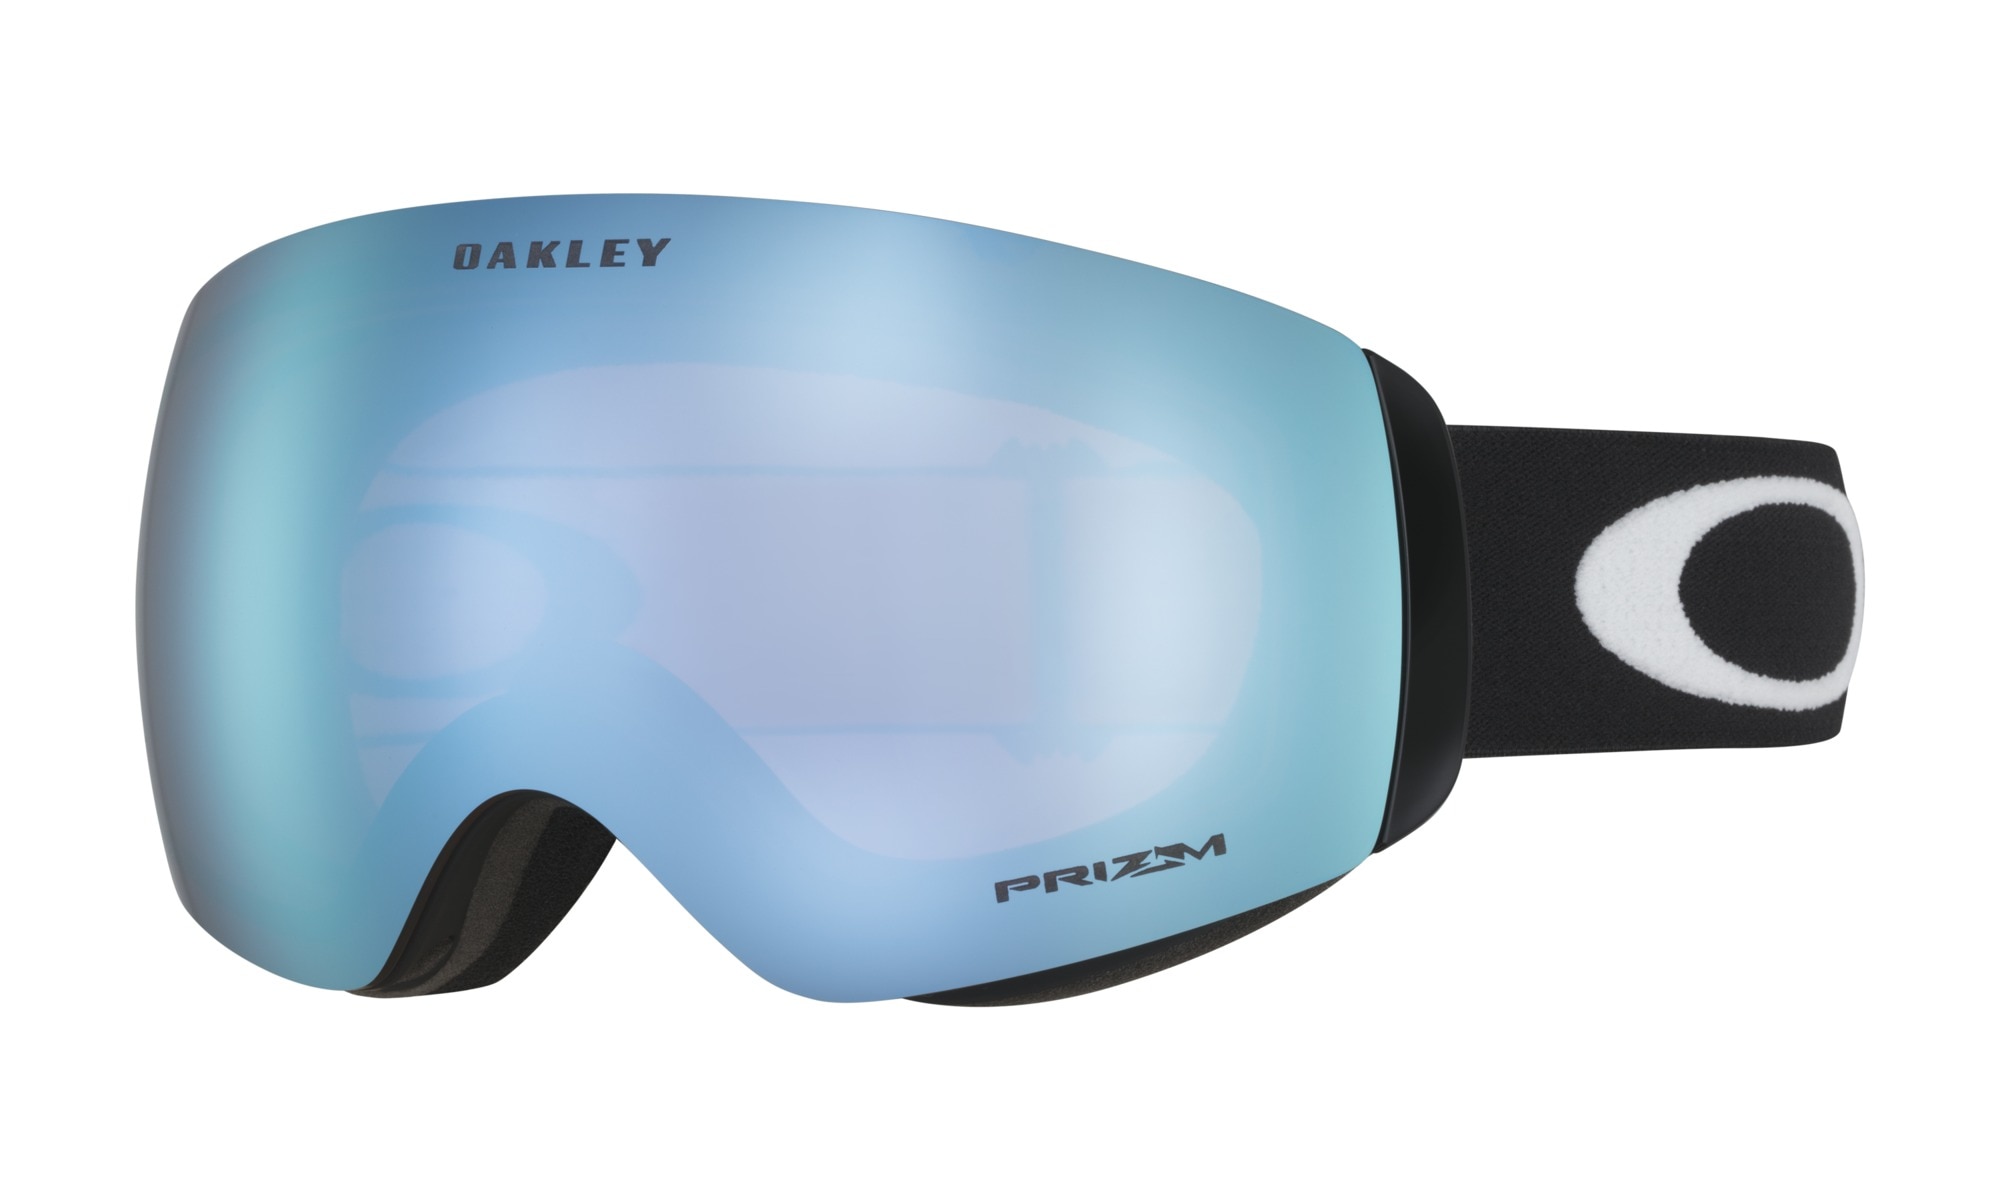 Glasögon Oakley Flightdeck XL, Black/Sapphire